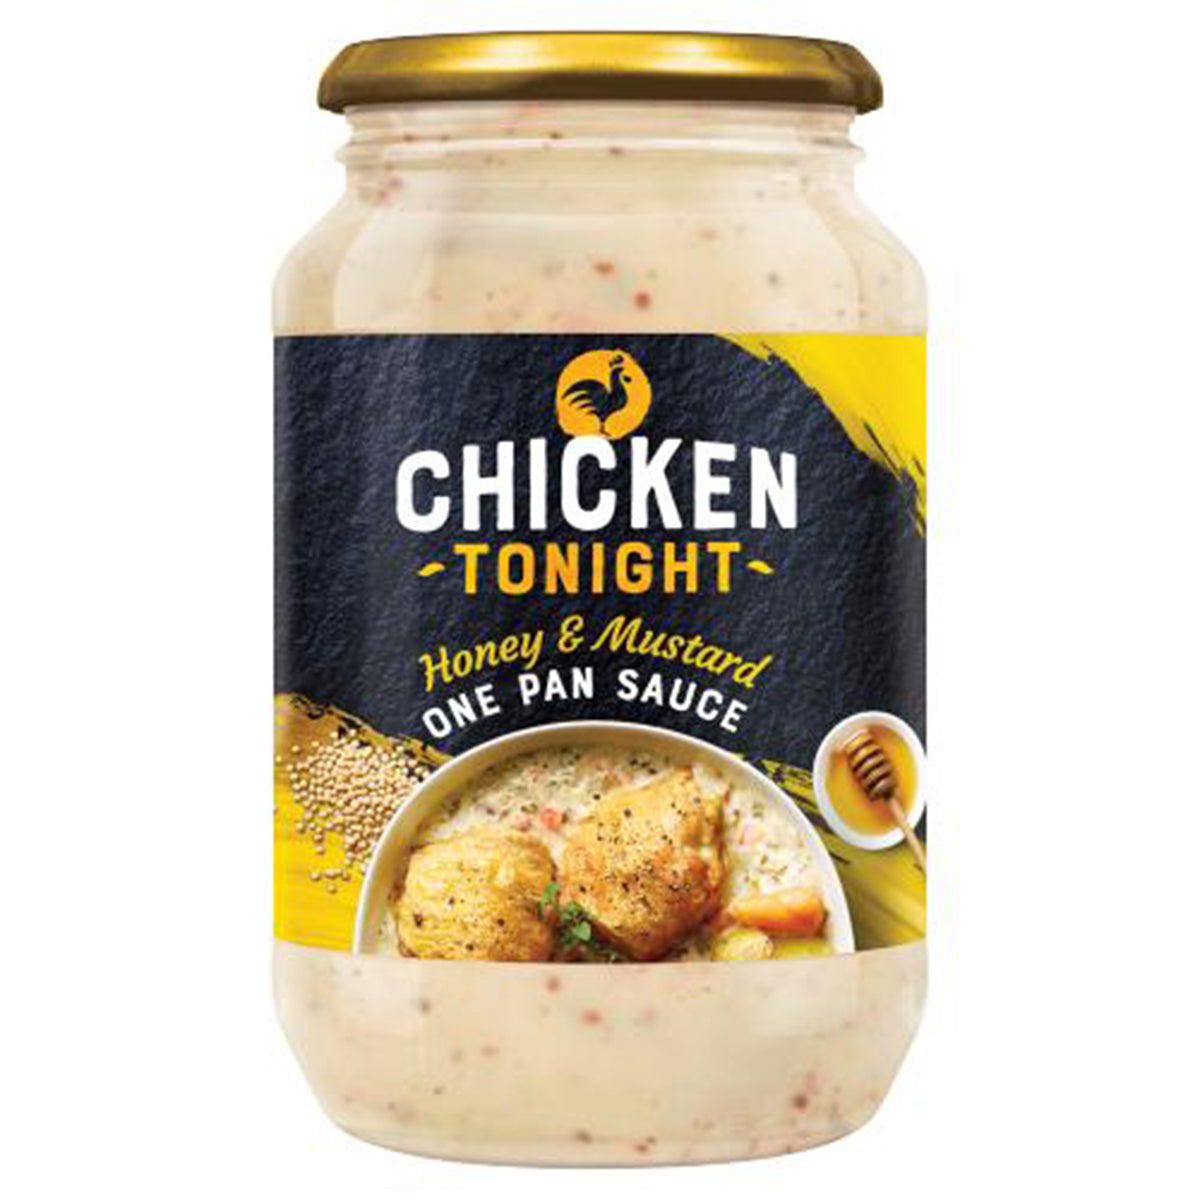 A jar of Chicken Tonight - Honey & Mustard One Pan Sauce - 500g.